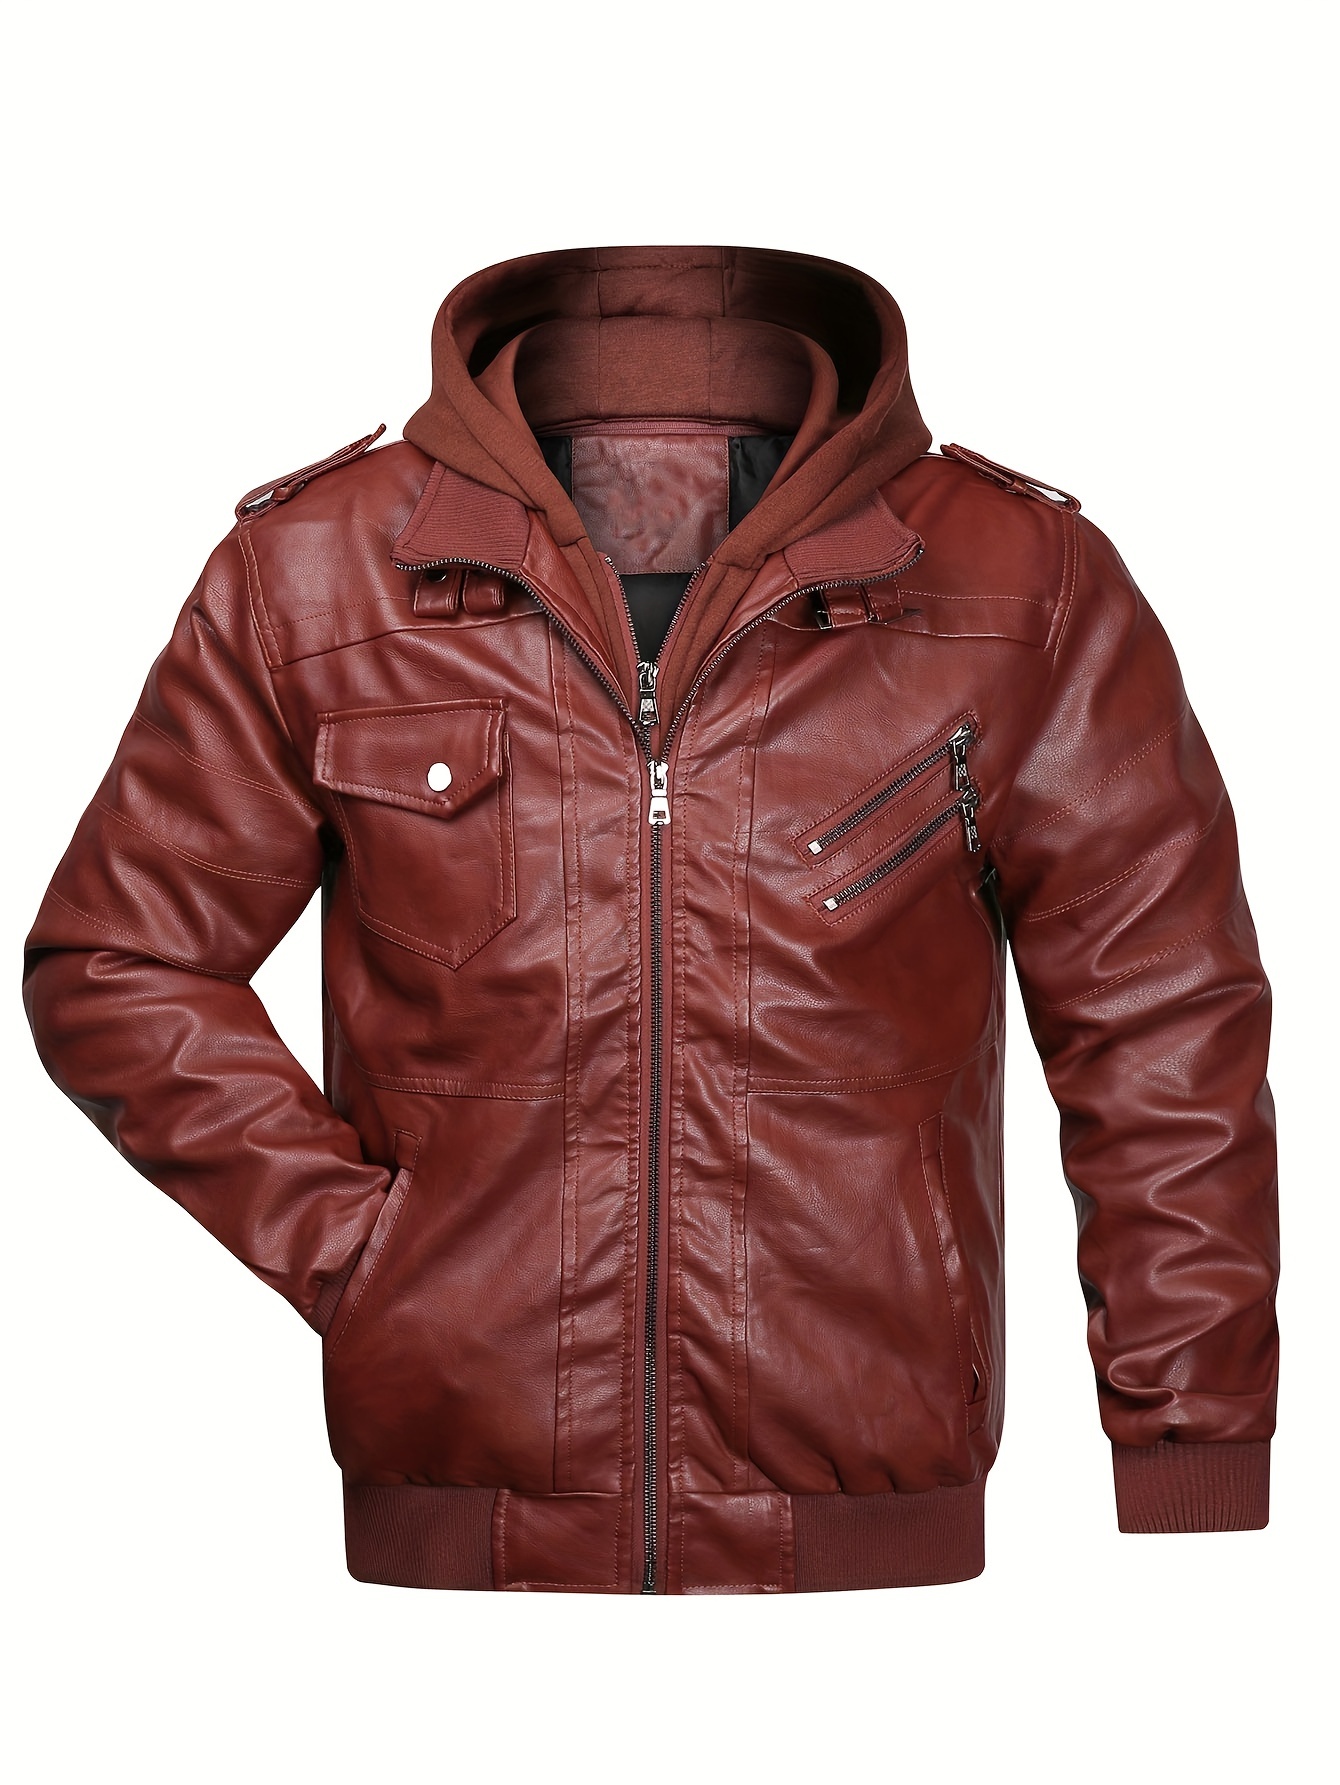 Men's Moto Leather Jacket in Burgundy Red Genuine Leather Jacket Coat | PalaLeather, Burgundy Red / M